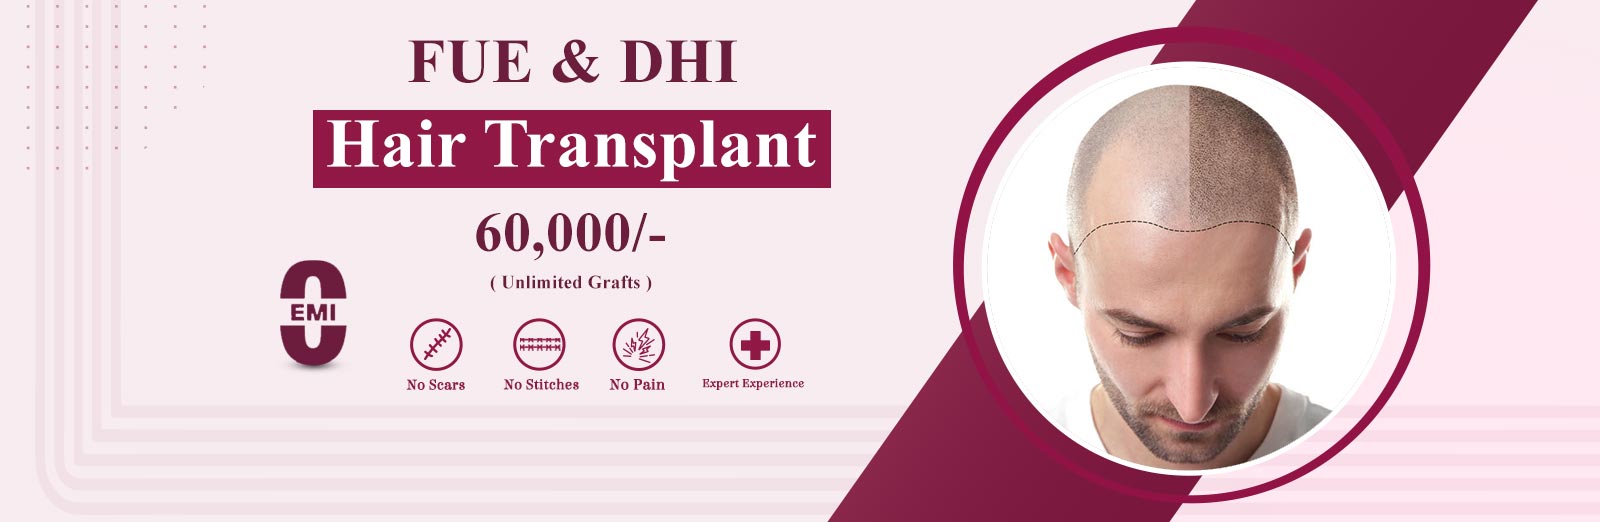 Hair Transplantation Treatment in Hyderabad